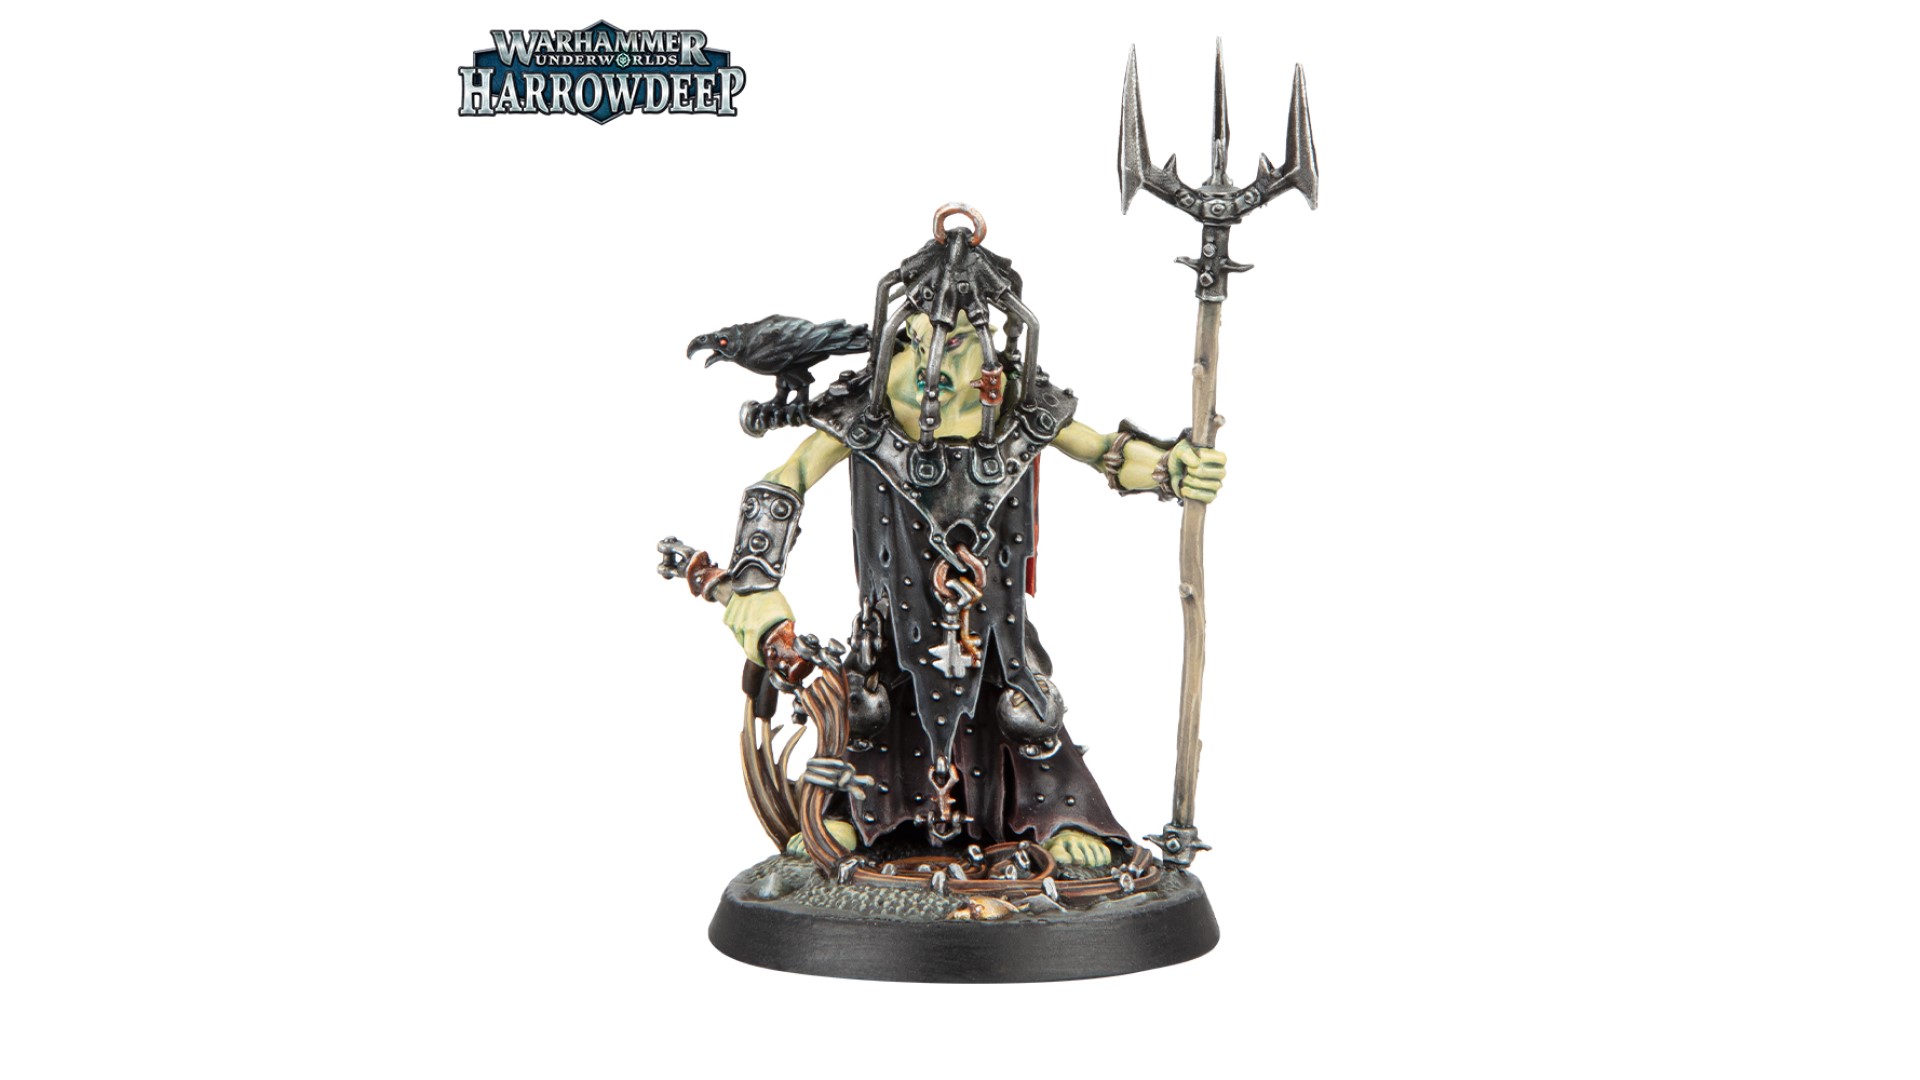 Warhammer Underworlds: Harrowdeep revealed - Warhammer Community photo of a Kruleboyz model with a cage helmet and a raven